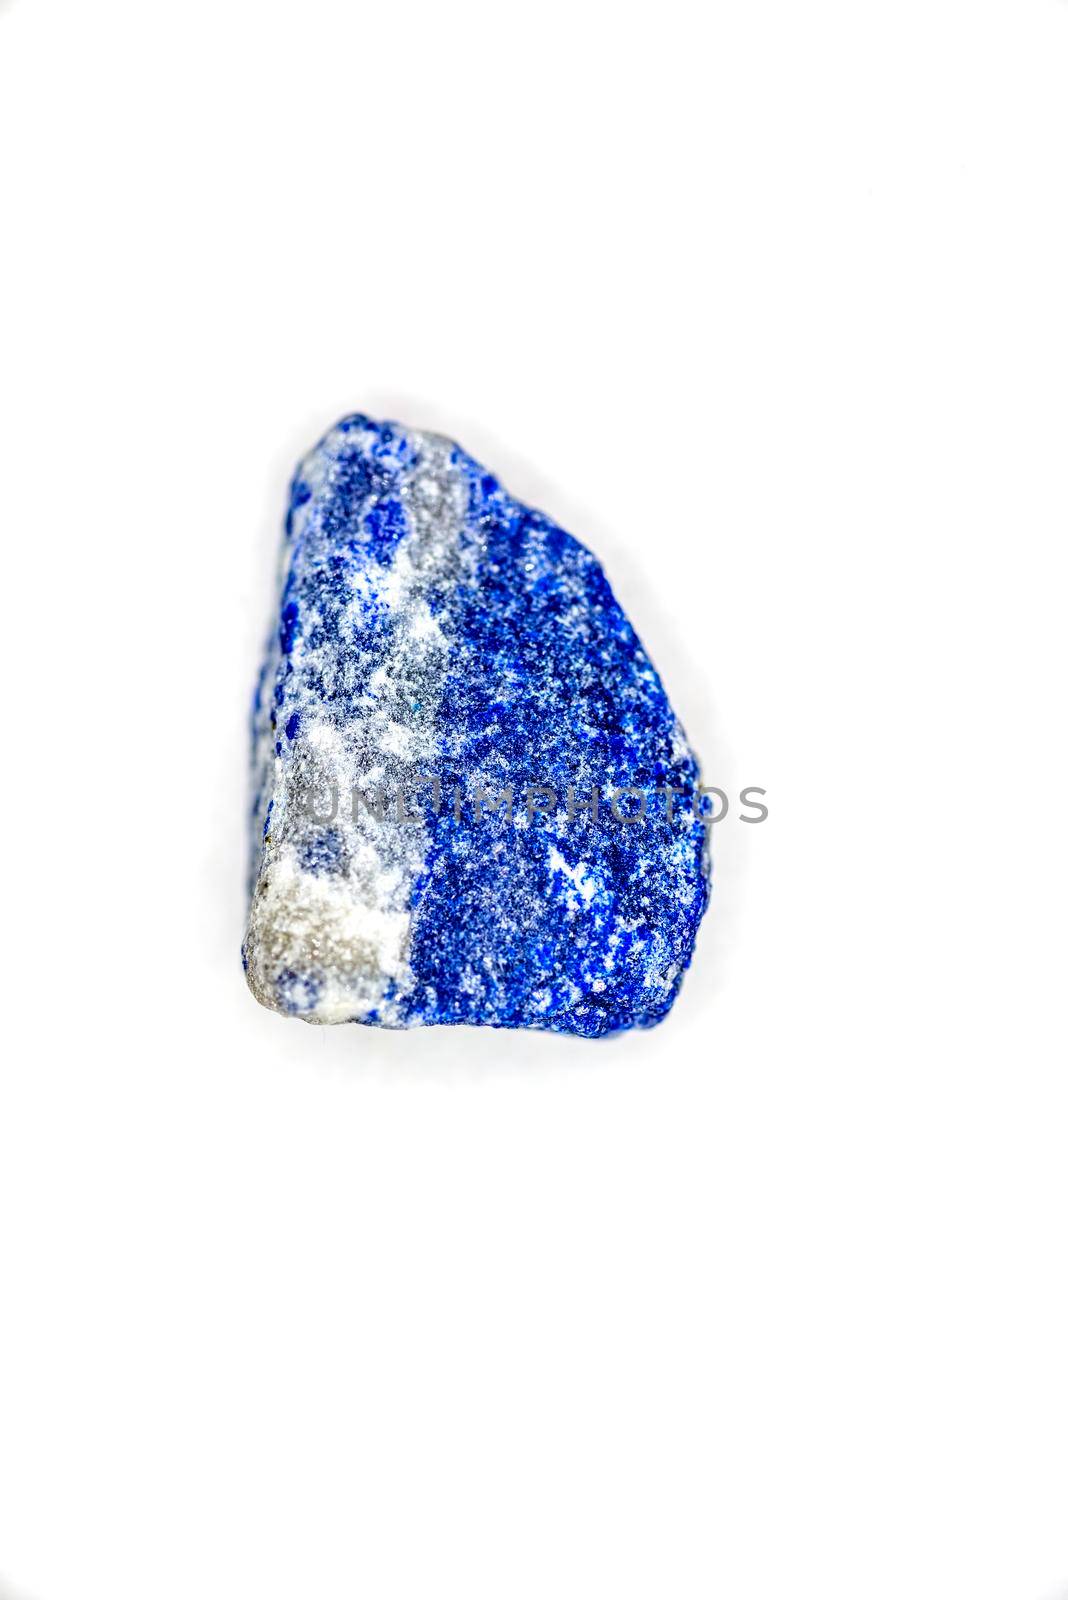 Lapis lazuli stone in a closeup by Jochen